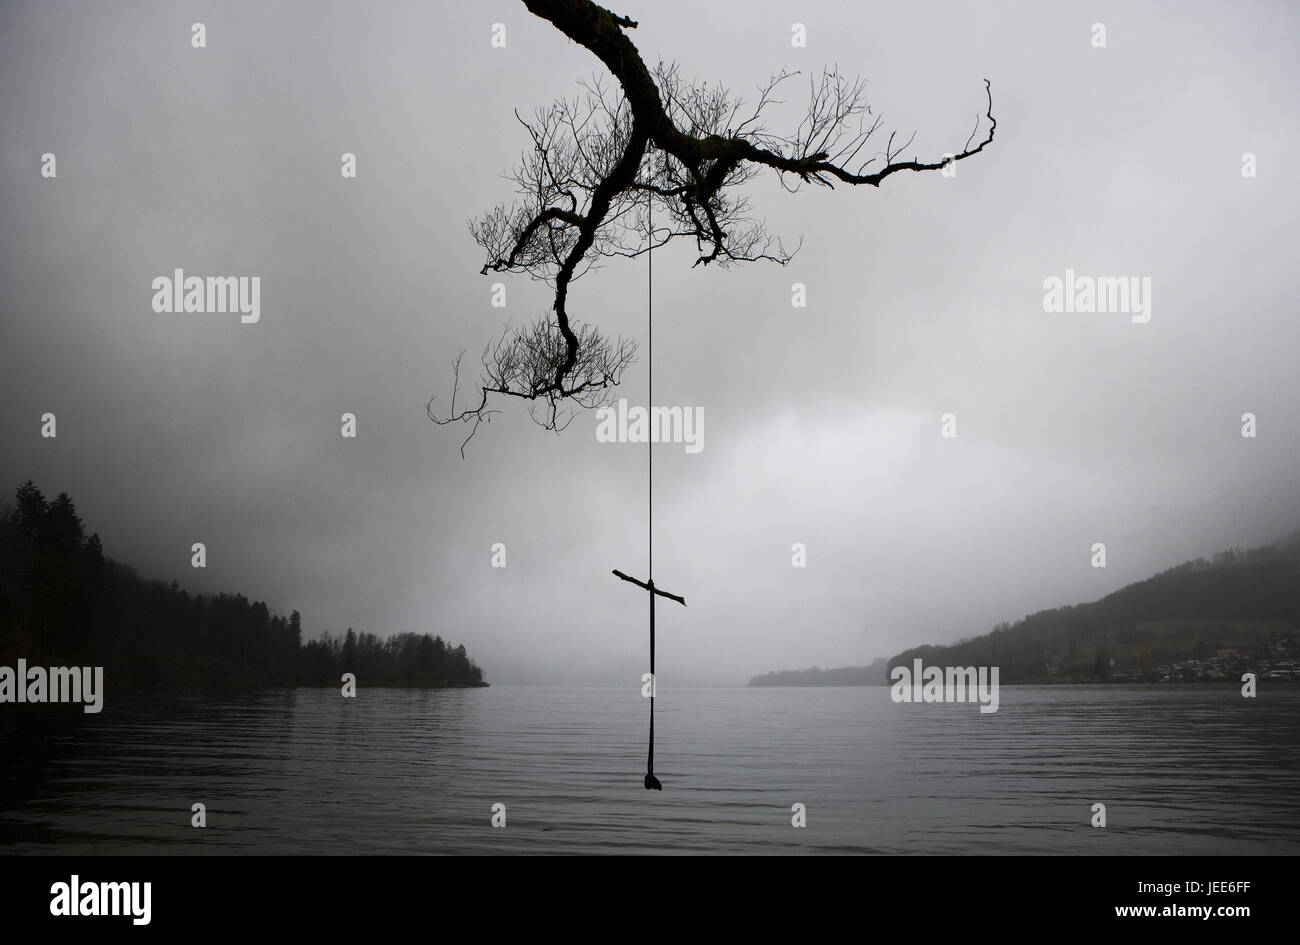 Lakeside, tree, rope, silhouette, s/w, Stock Photo